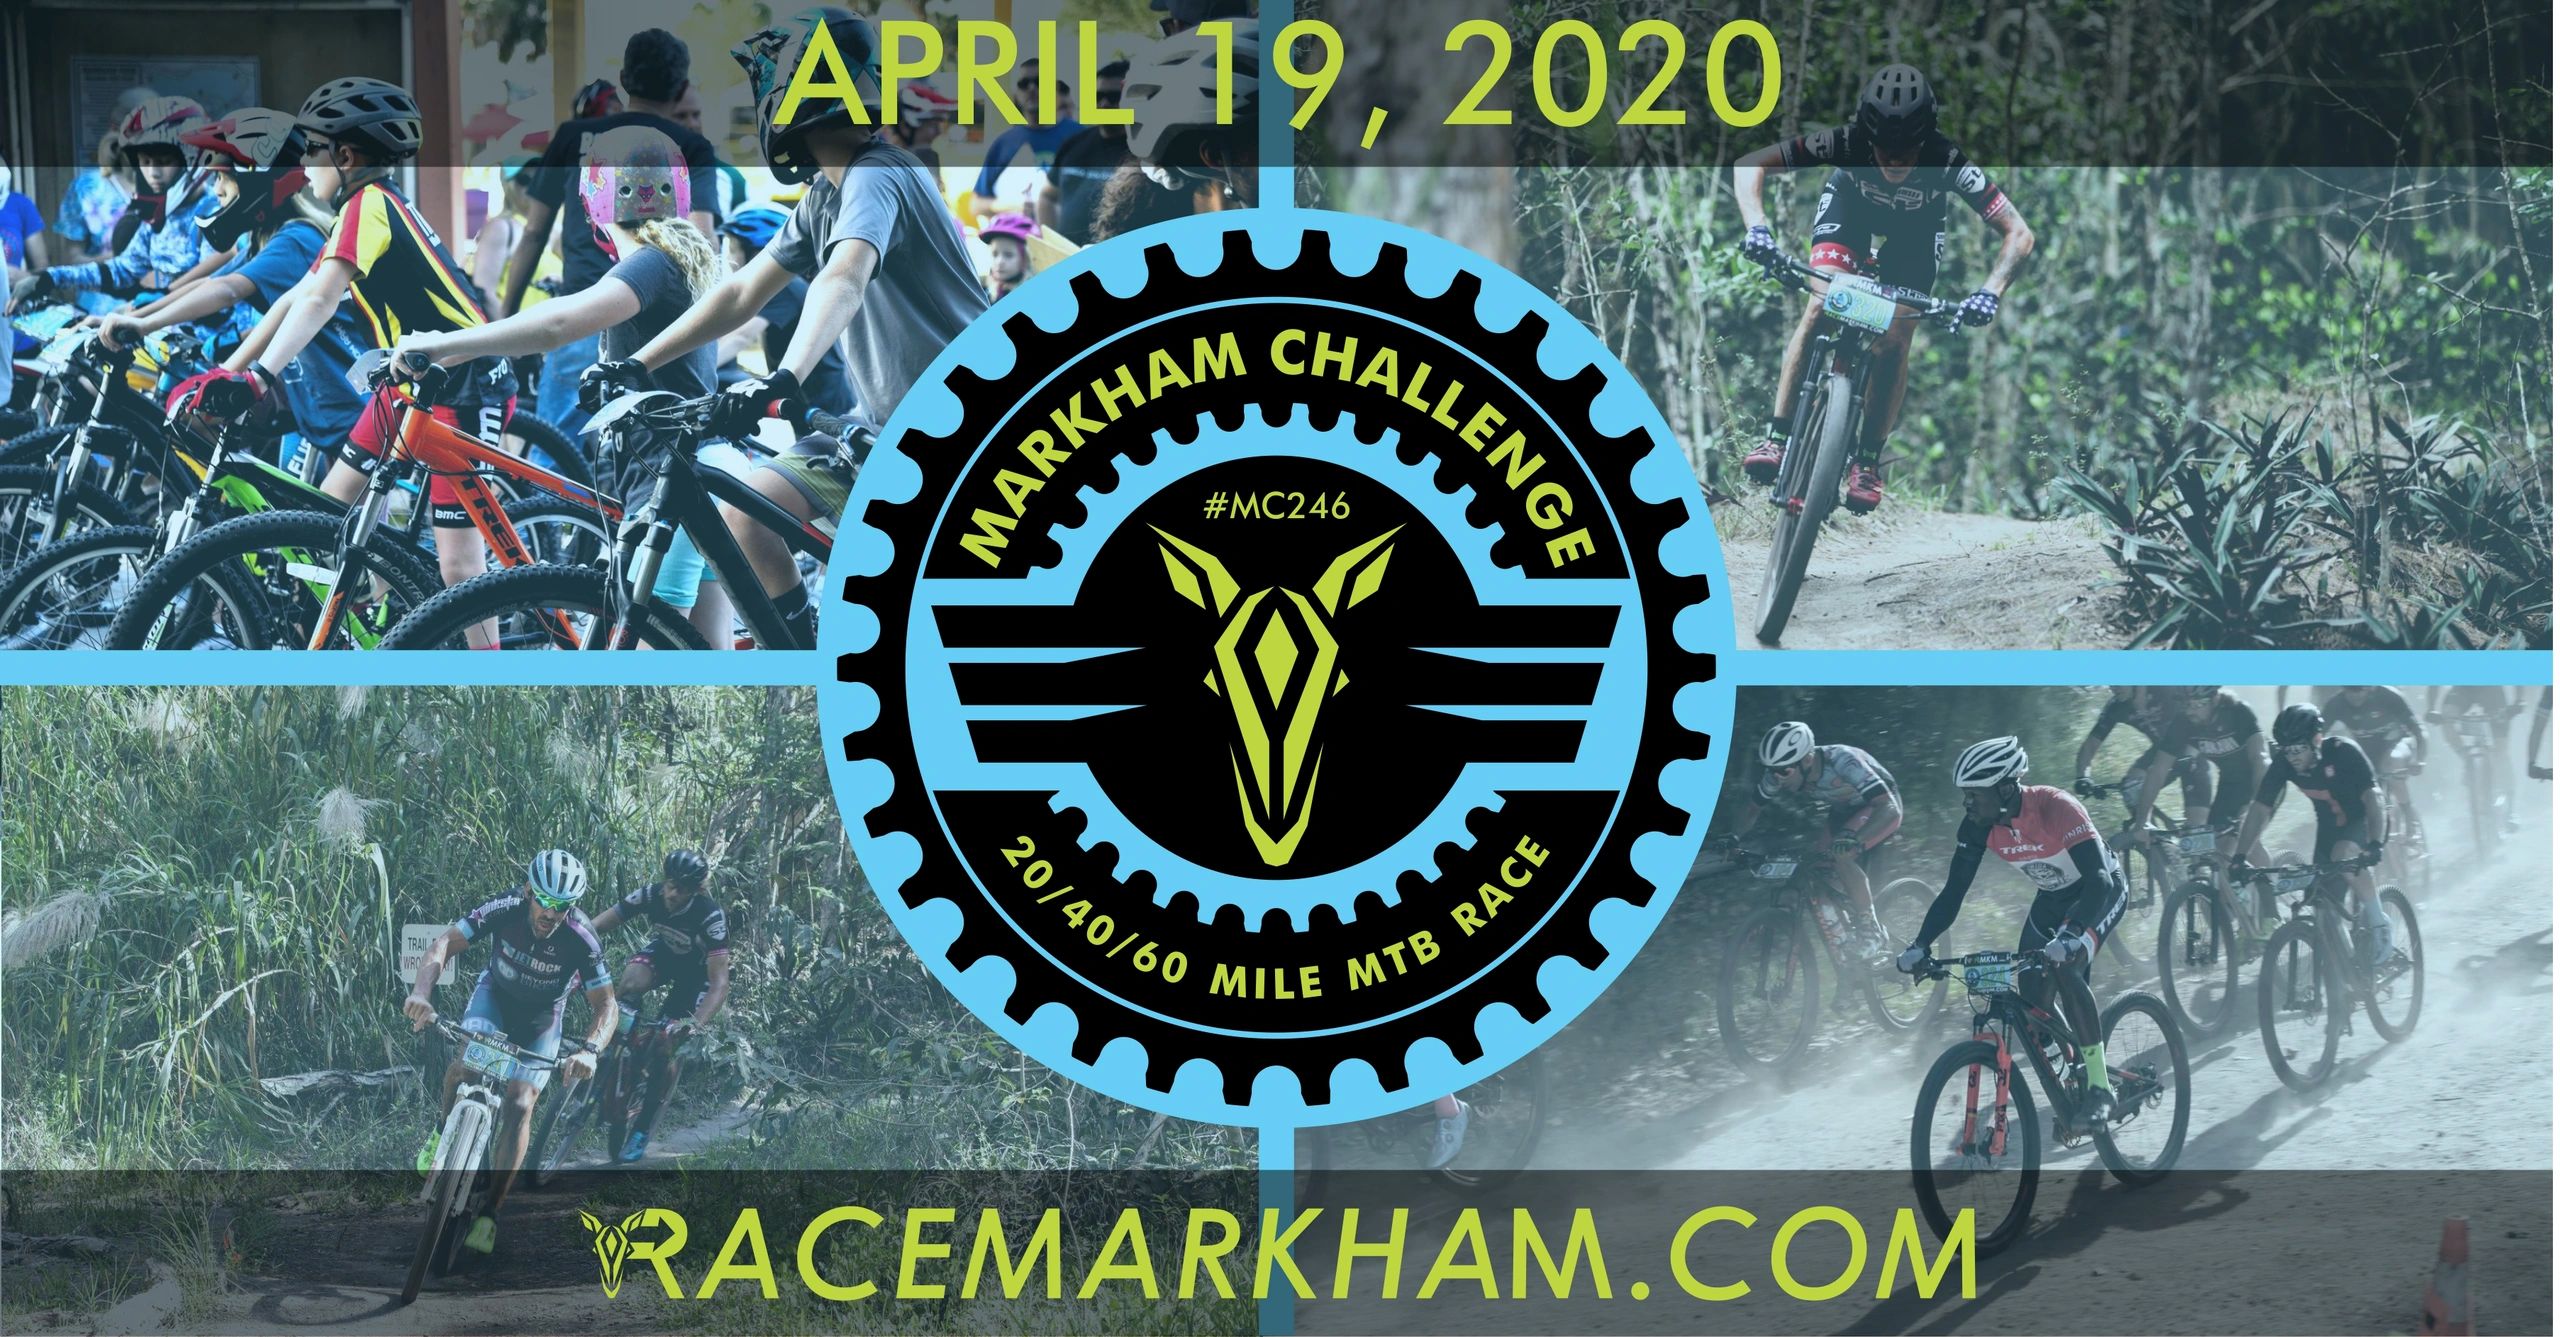 Markham Challenge Race | RACEMARKHAM.COM